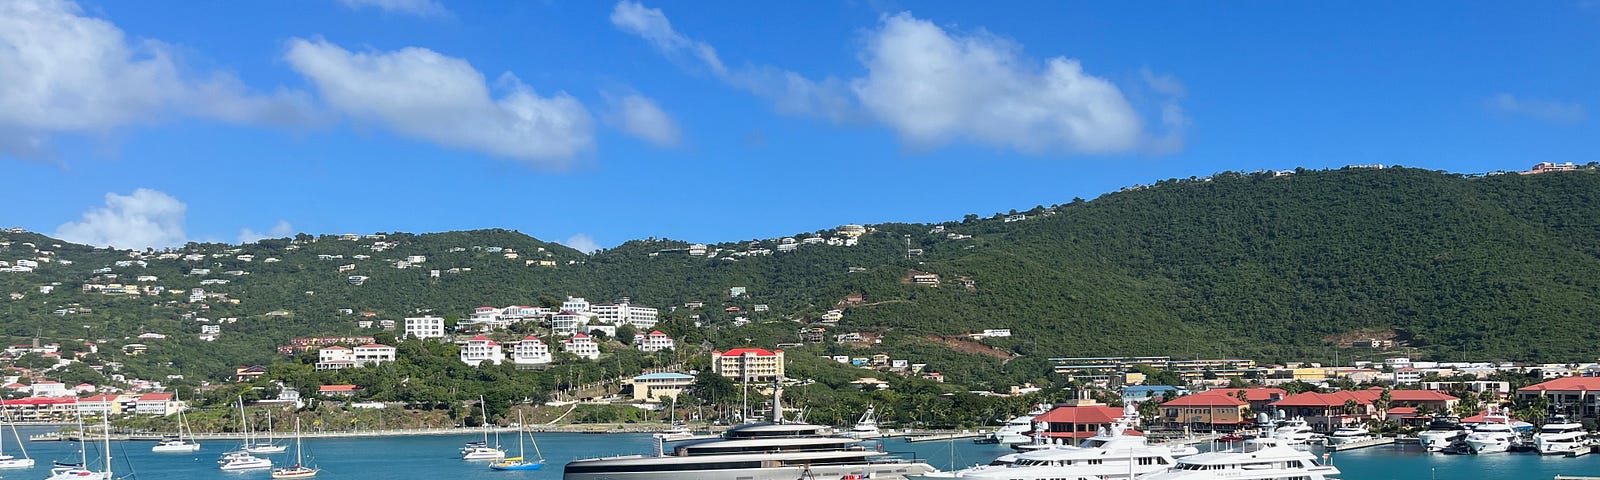 over-sized yachts and white sail boats anchored at St. Thomas